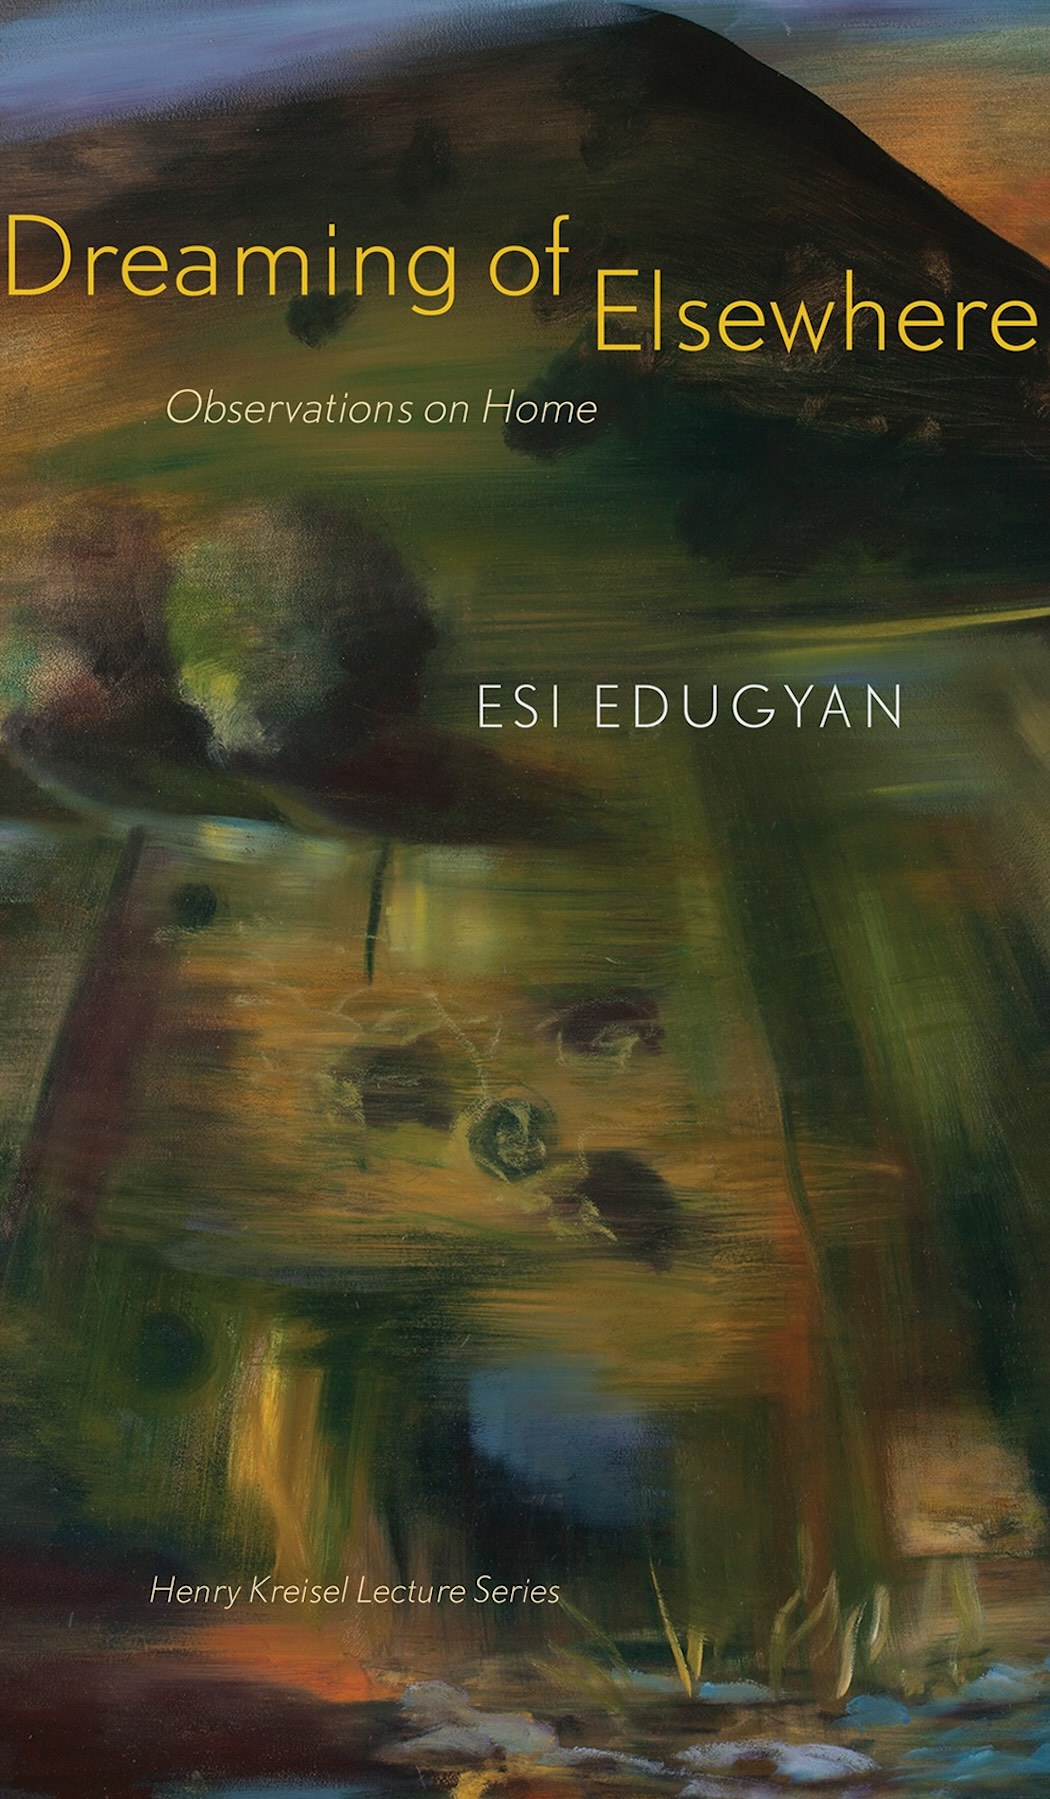 Cover Image of Esi Edugyan's Kreisel Publication Titled Dreaming of Elsewhere